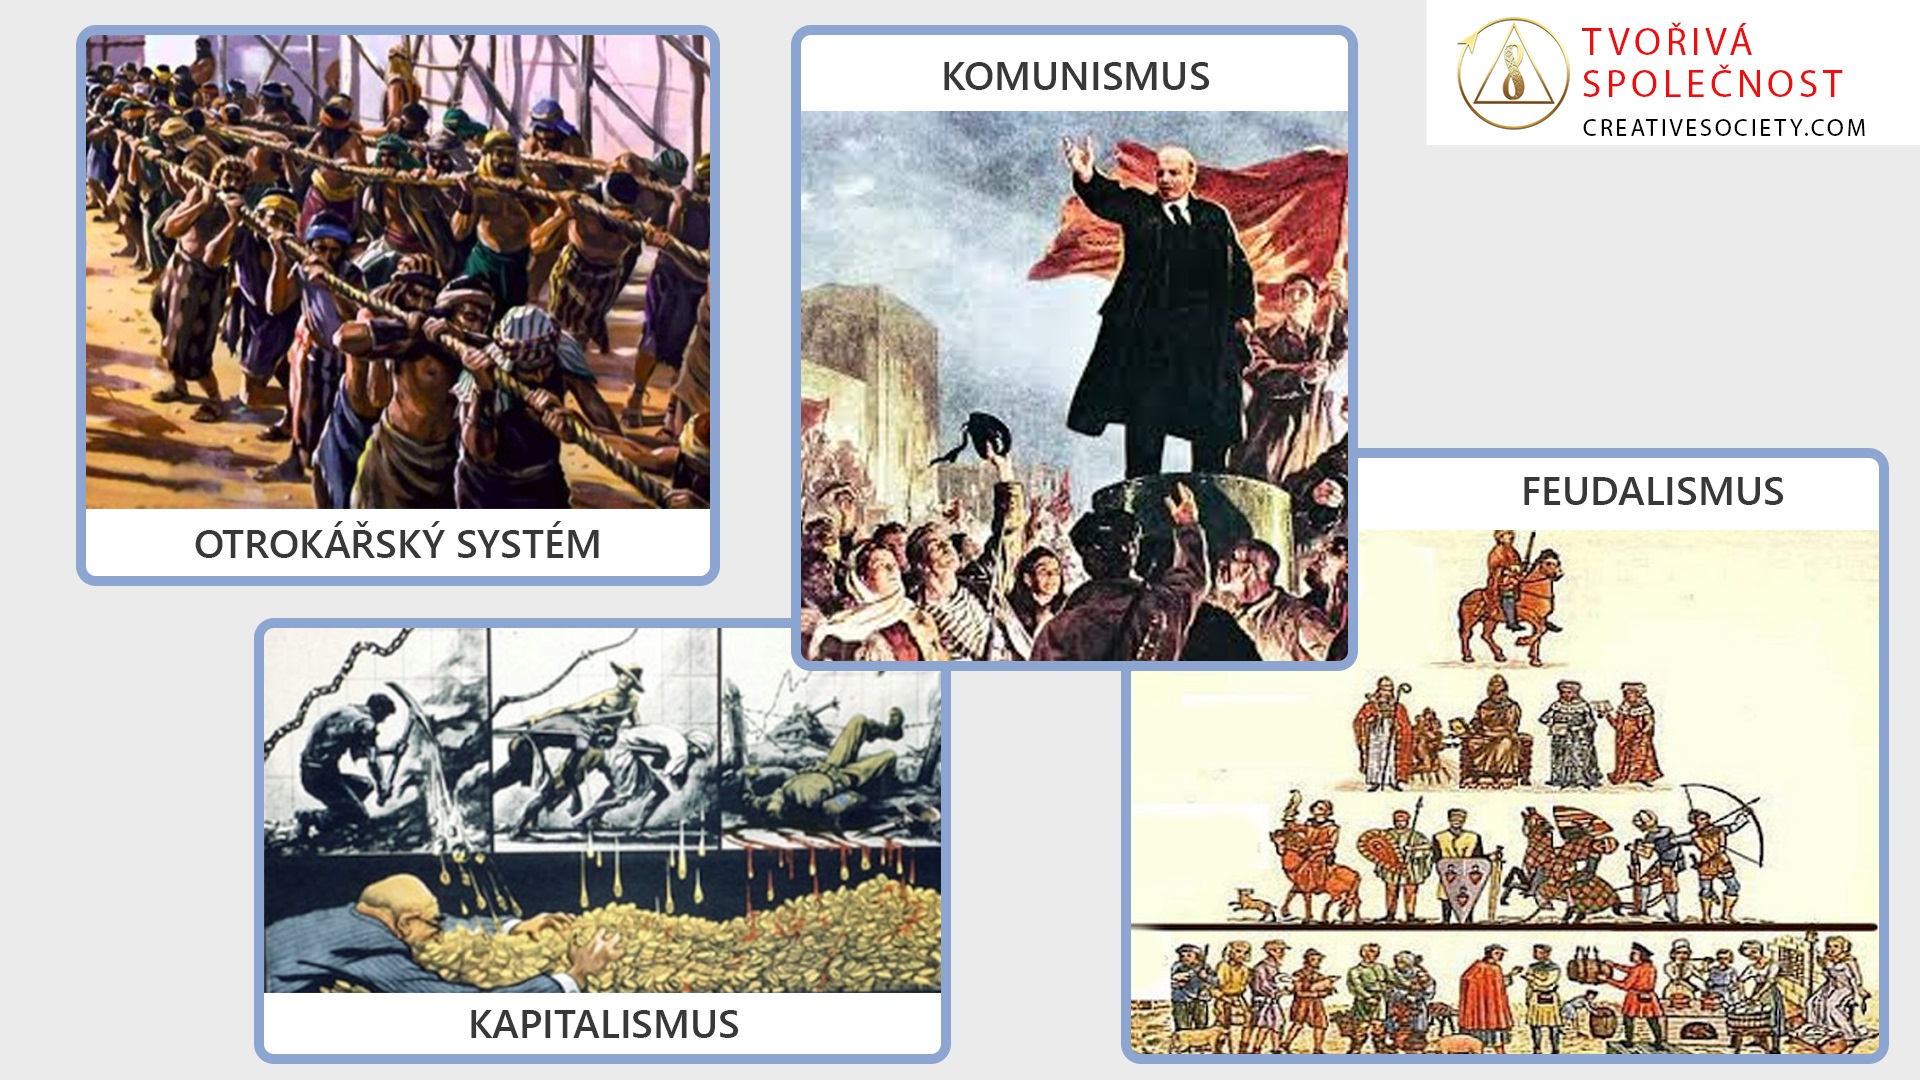 Otrokářský systém, feudalismus, kapitalismus, socialismus, komunismus.